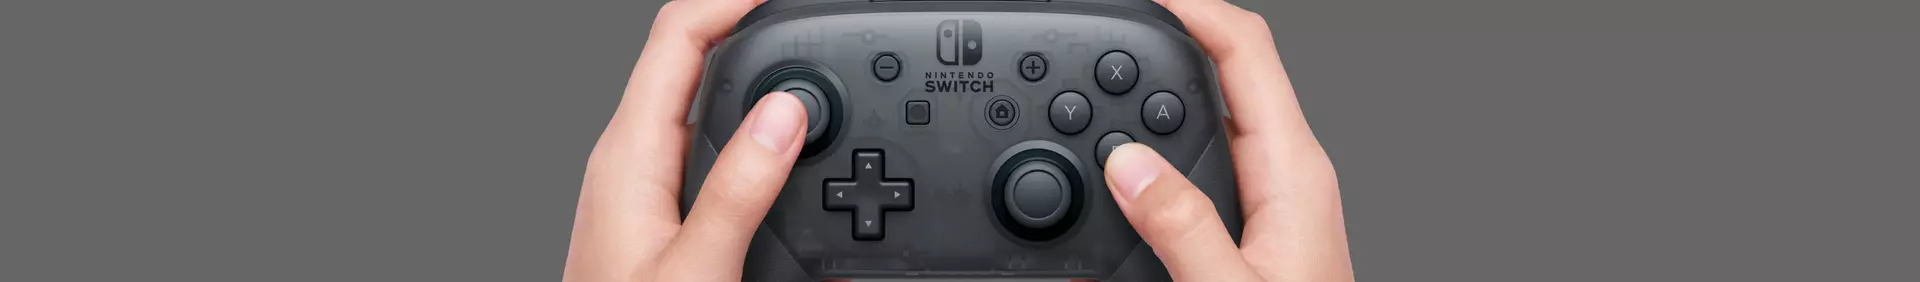 Accesorios Nintendo Switch